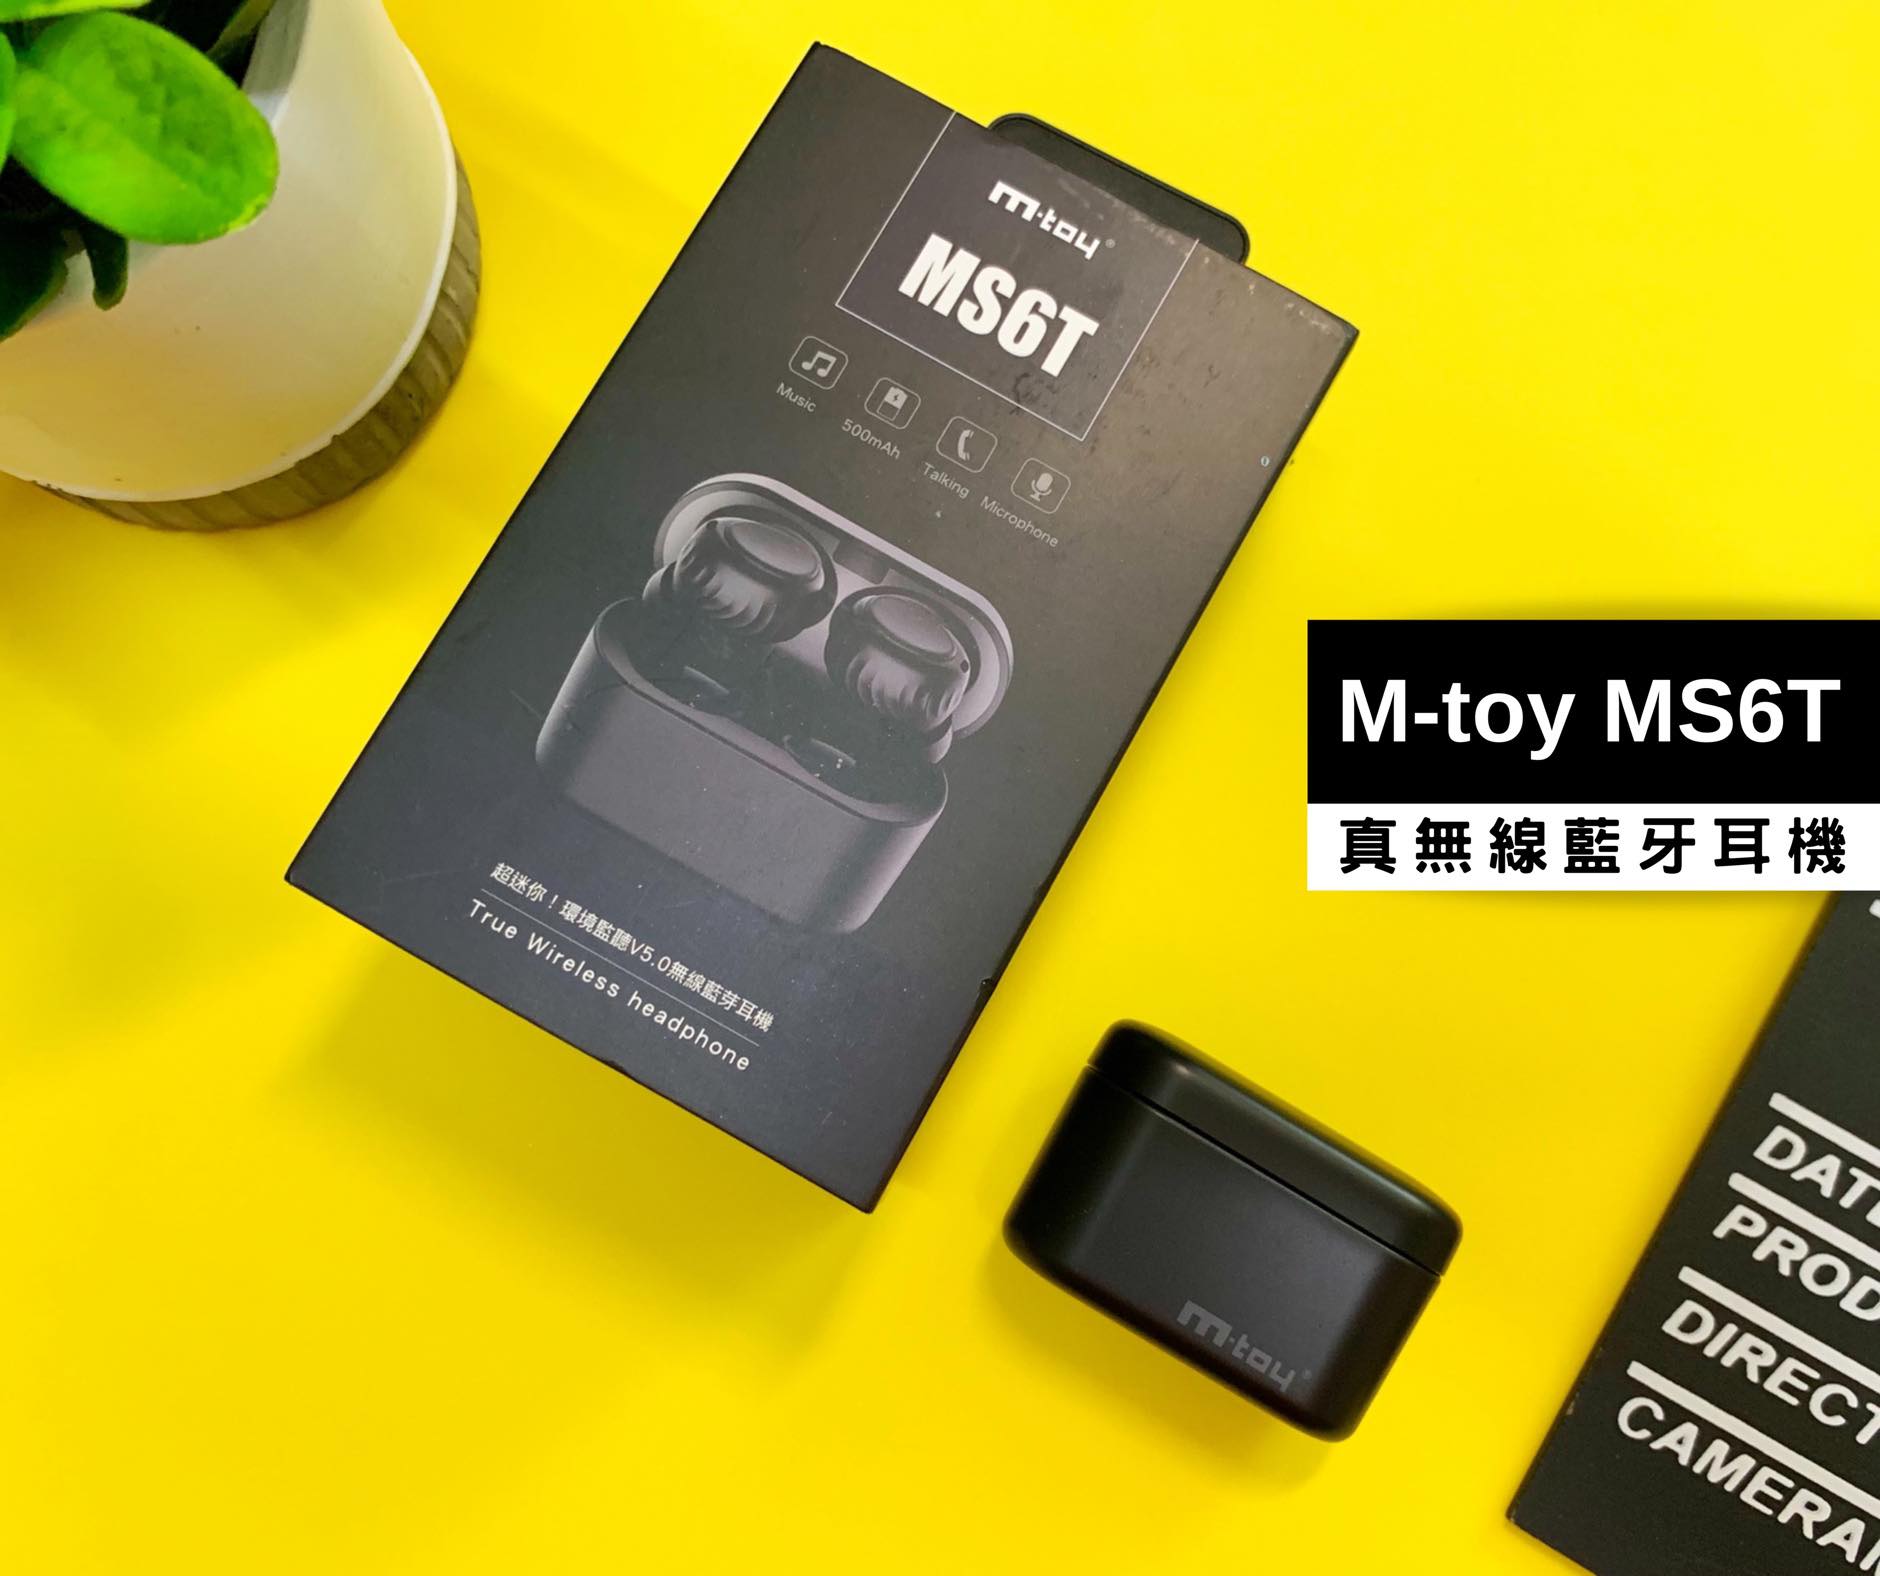 M-toy MS6T 真無線藍牙耳機 - 具備環境監聽的千元級別耳機 - 真無線藍牙耳機 - 科技生活 - teXch